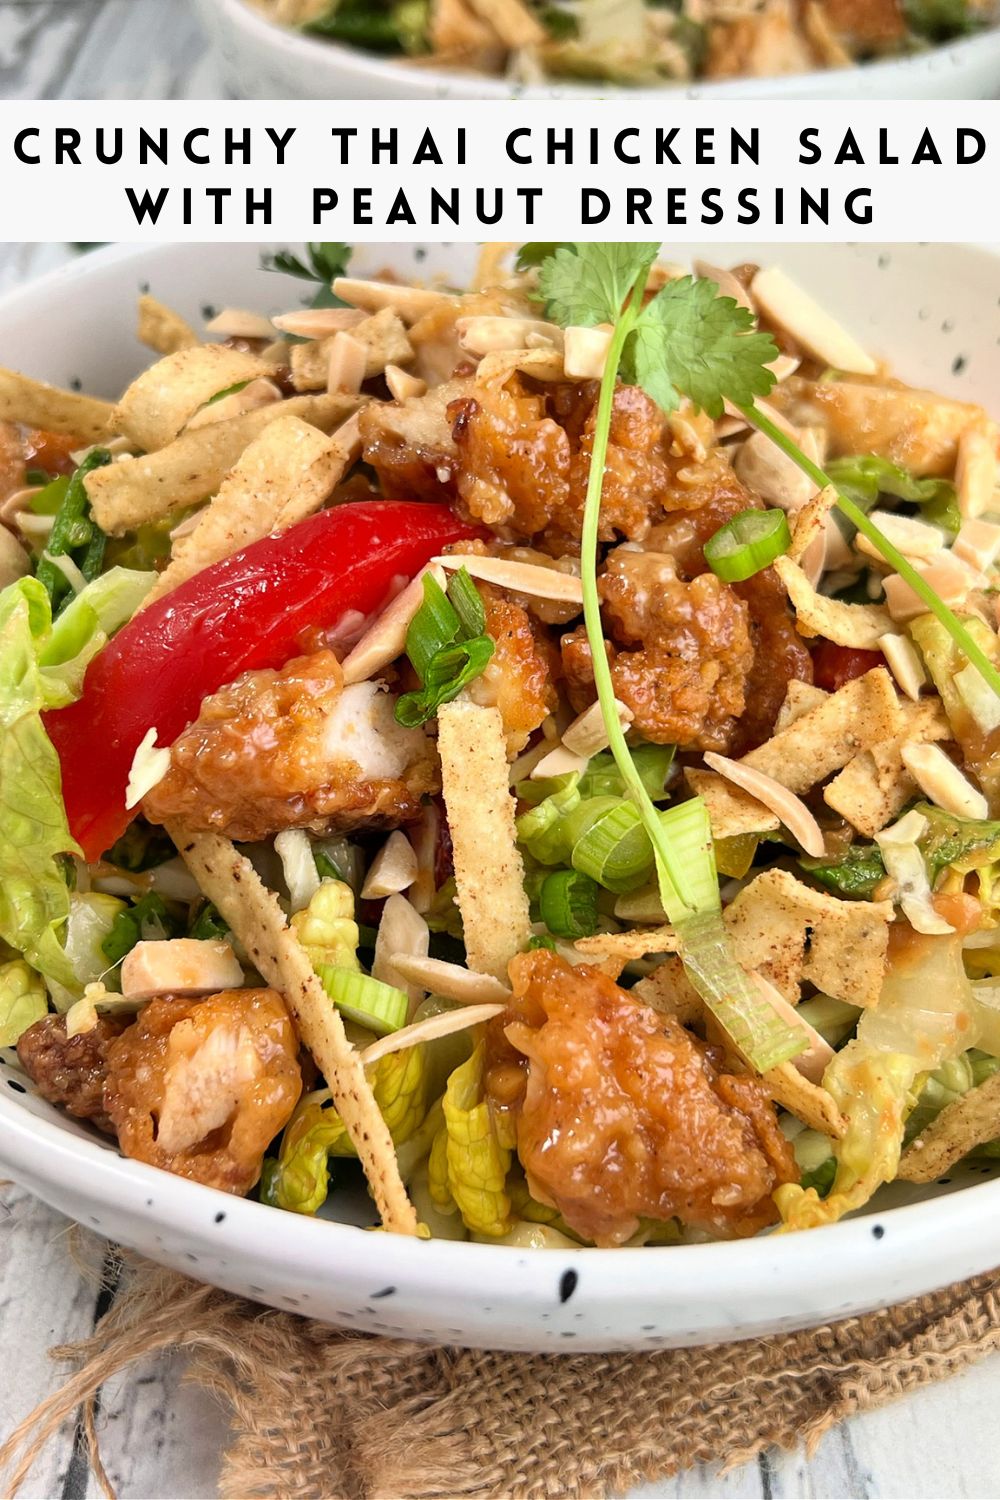 Crunchy Thai Chicken Salad with Peanut Dressing via @preventionrd